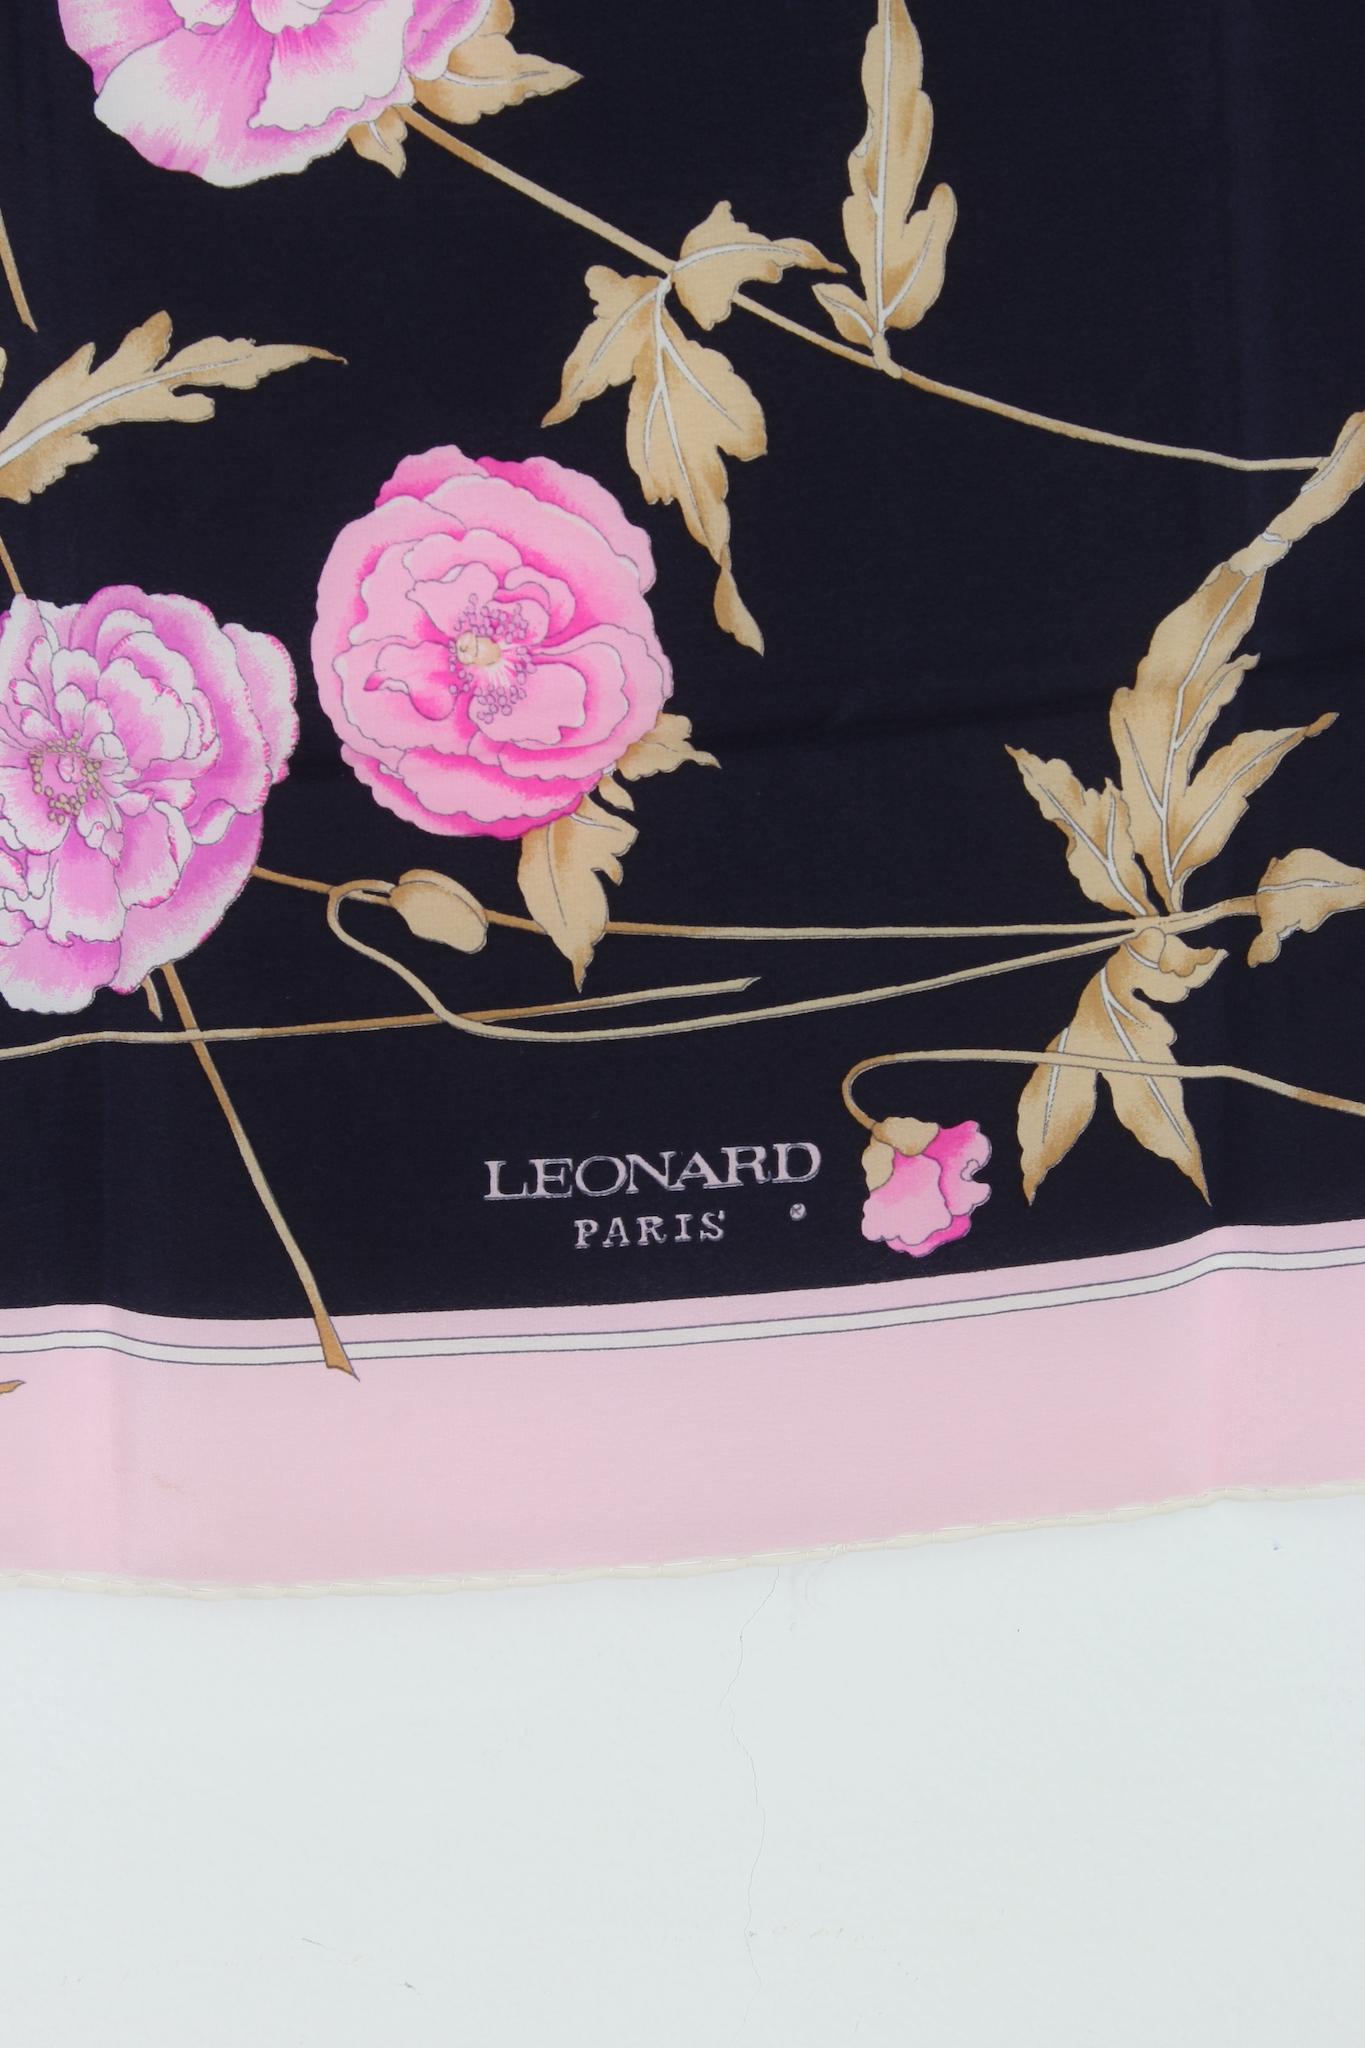 Leonard Paris vintage 80s scarf. Black background with pink and purple floral designs. 100% silk fabric.

Measures: 90 x 90 cm